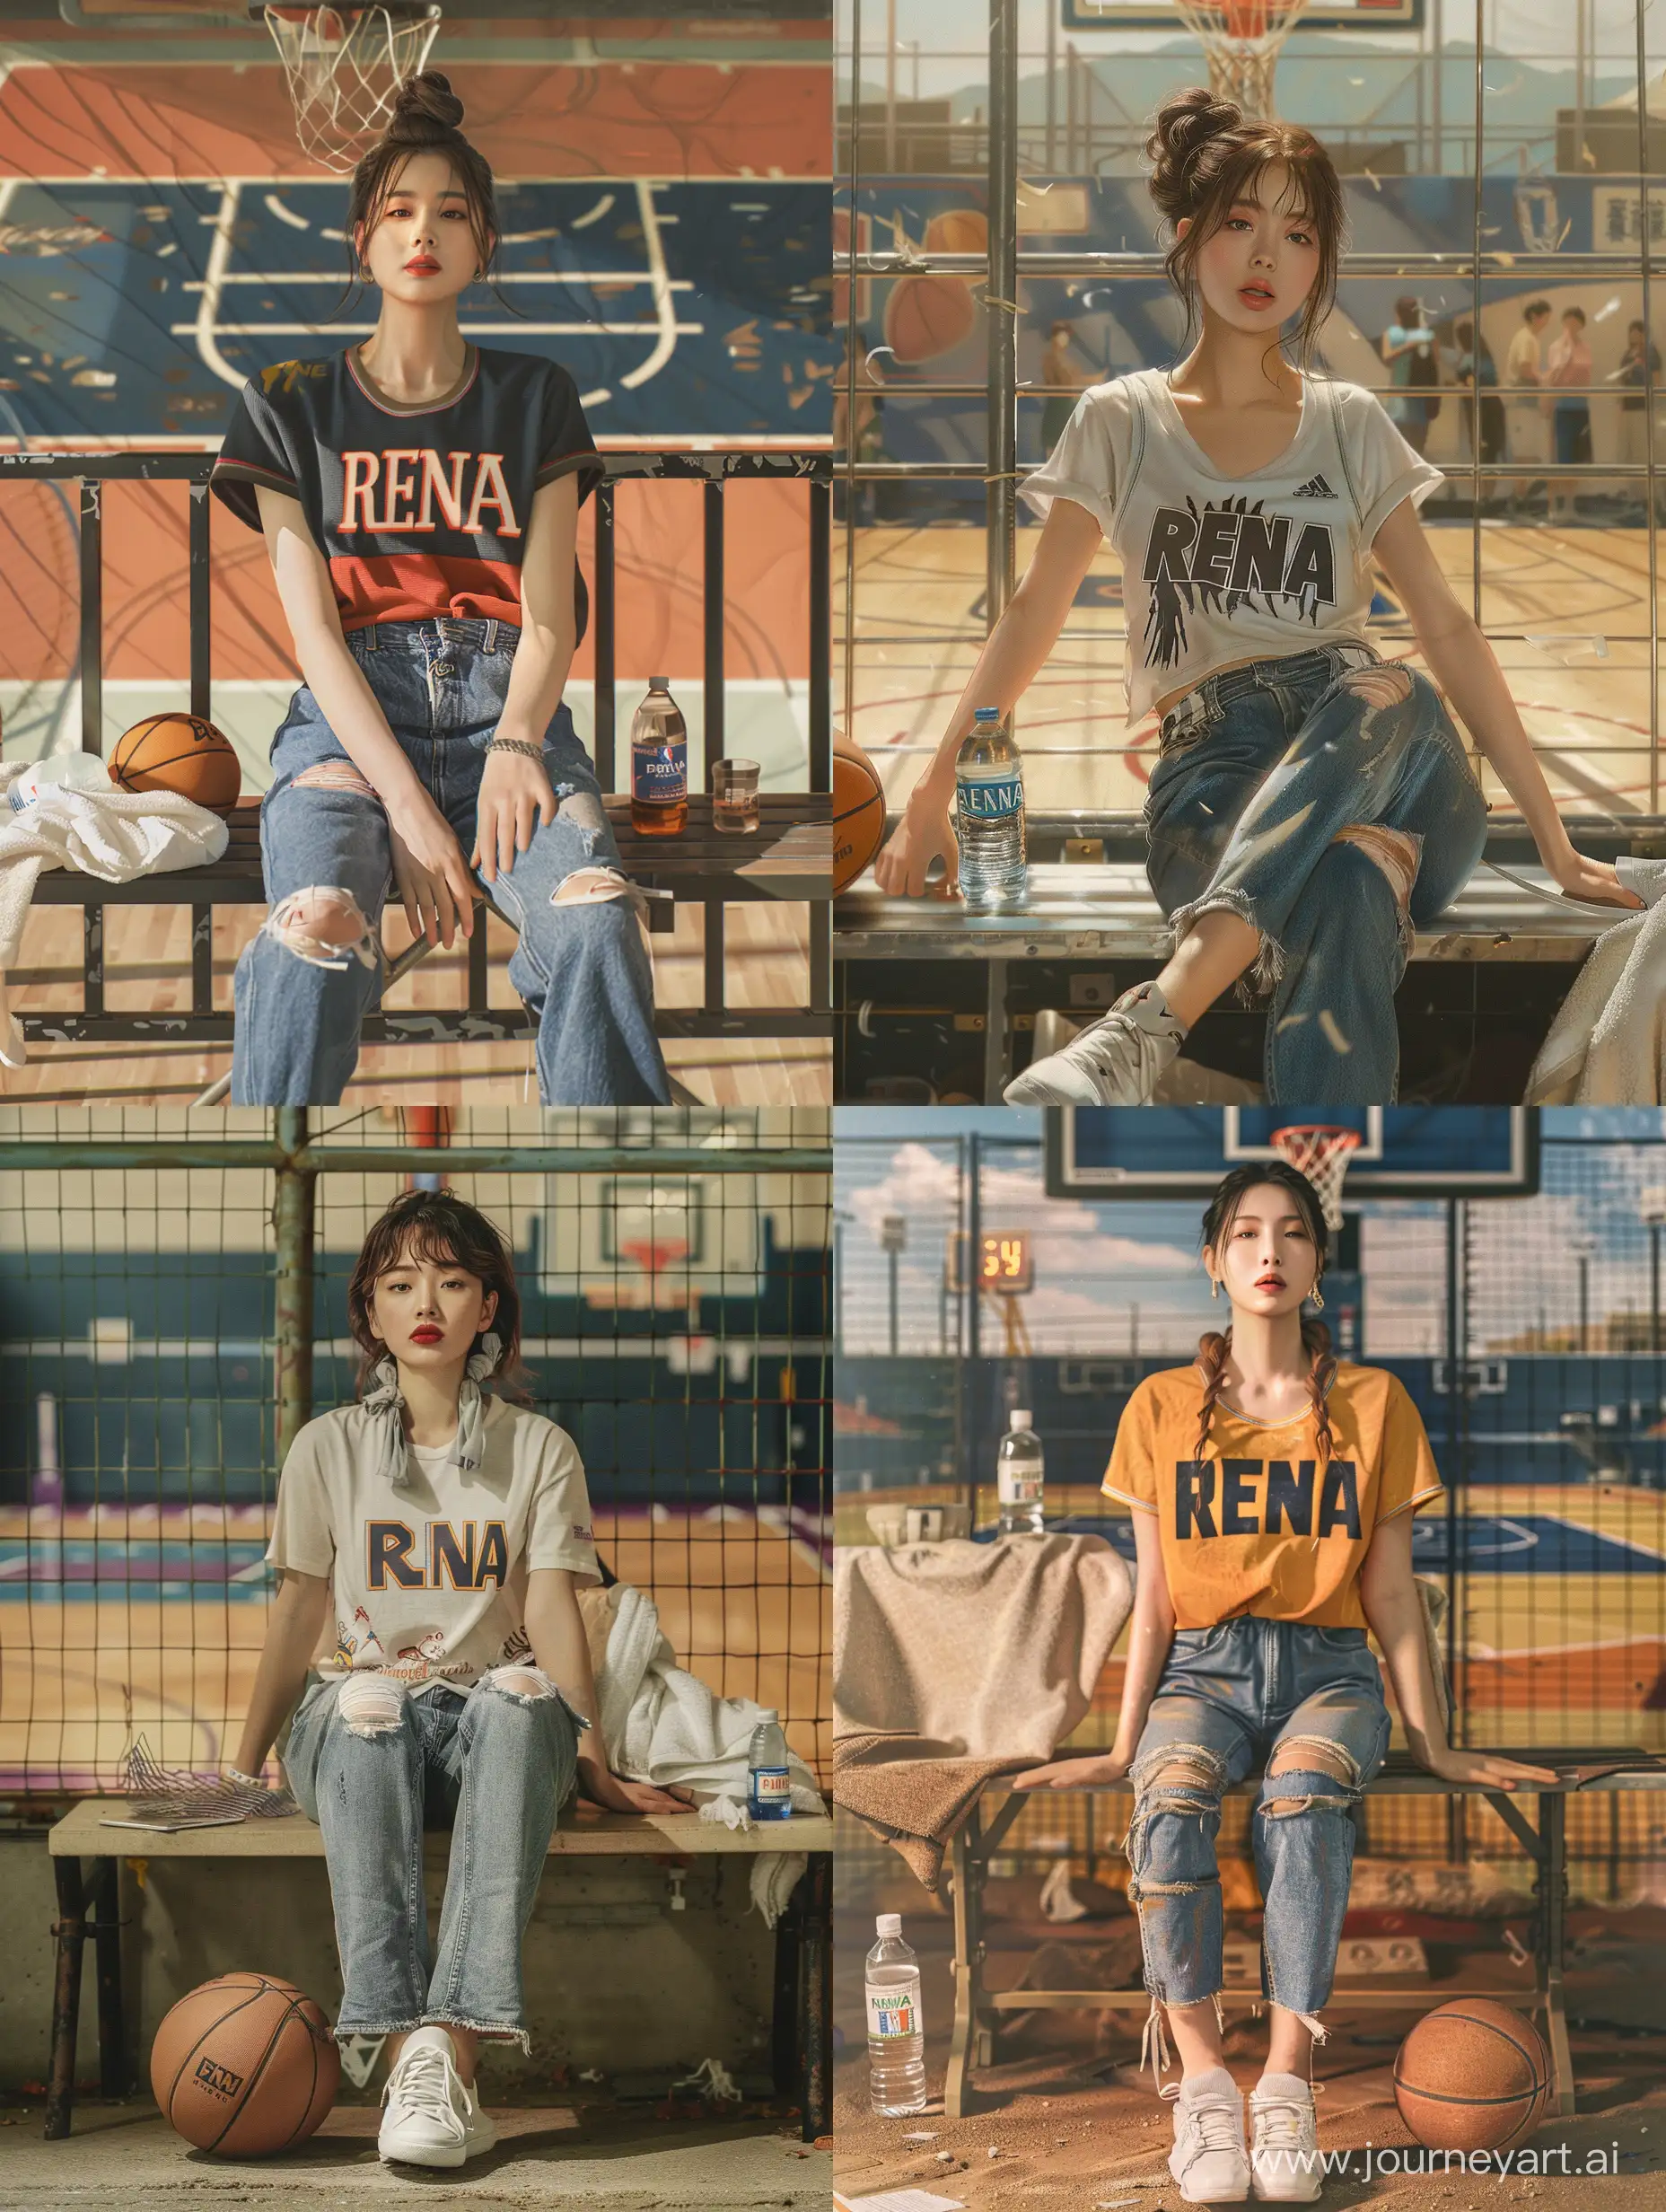 Stylish-Asian-Woman-RENA-Basketball-Shirt-Street-Fashion-on-Basketball-Court-Bench